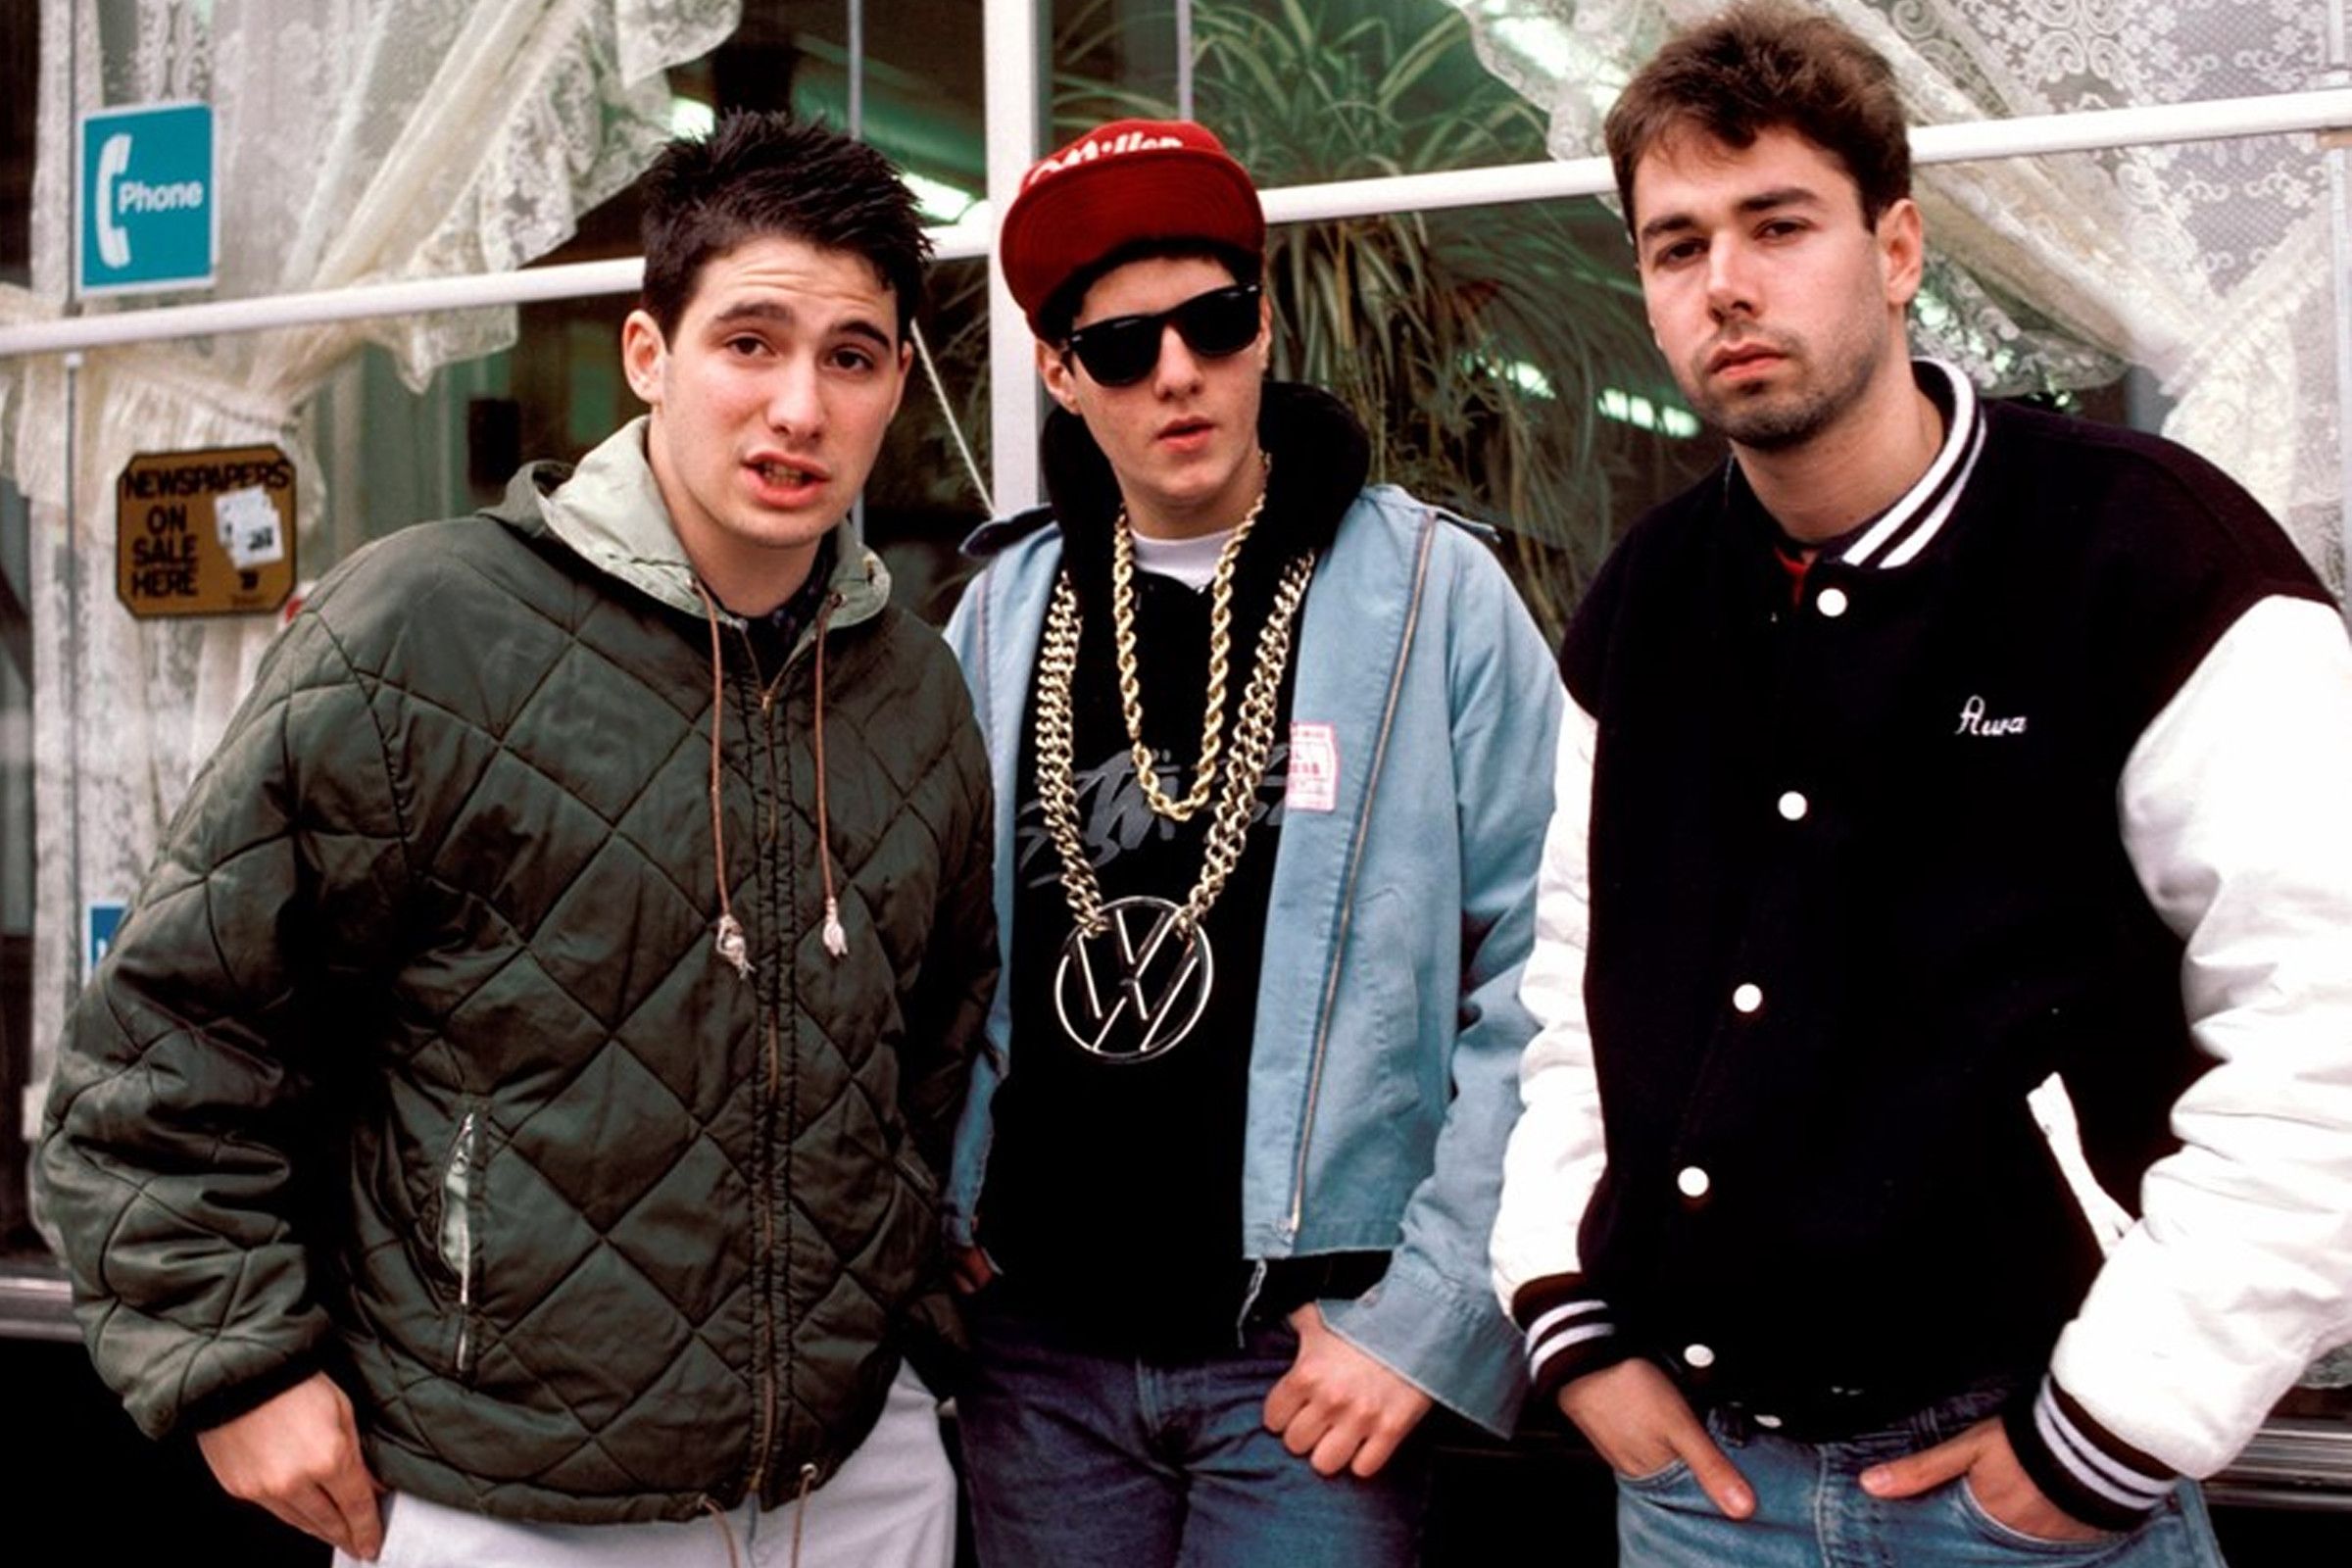 The Beastie Boys in 1987